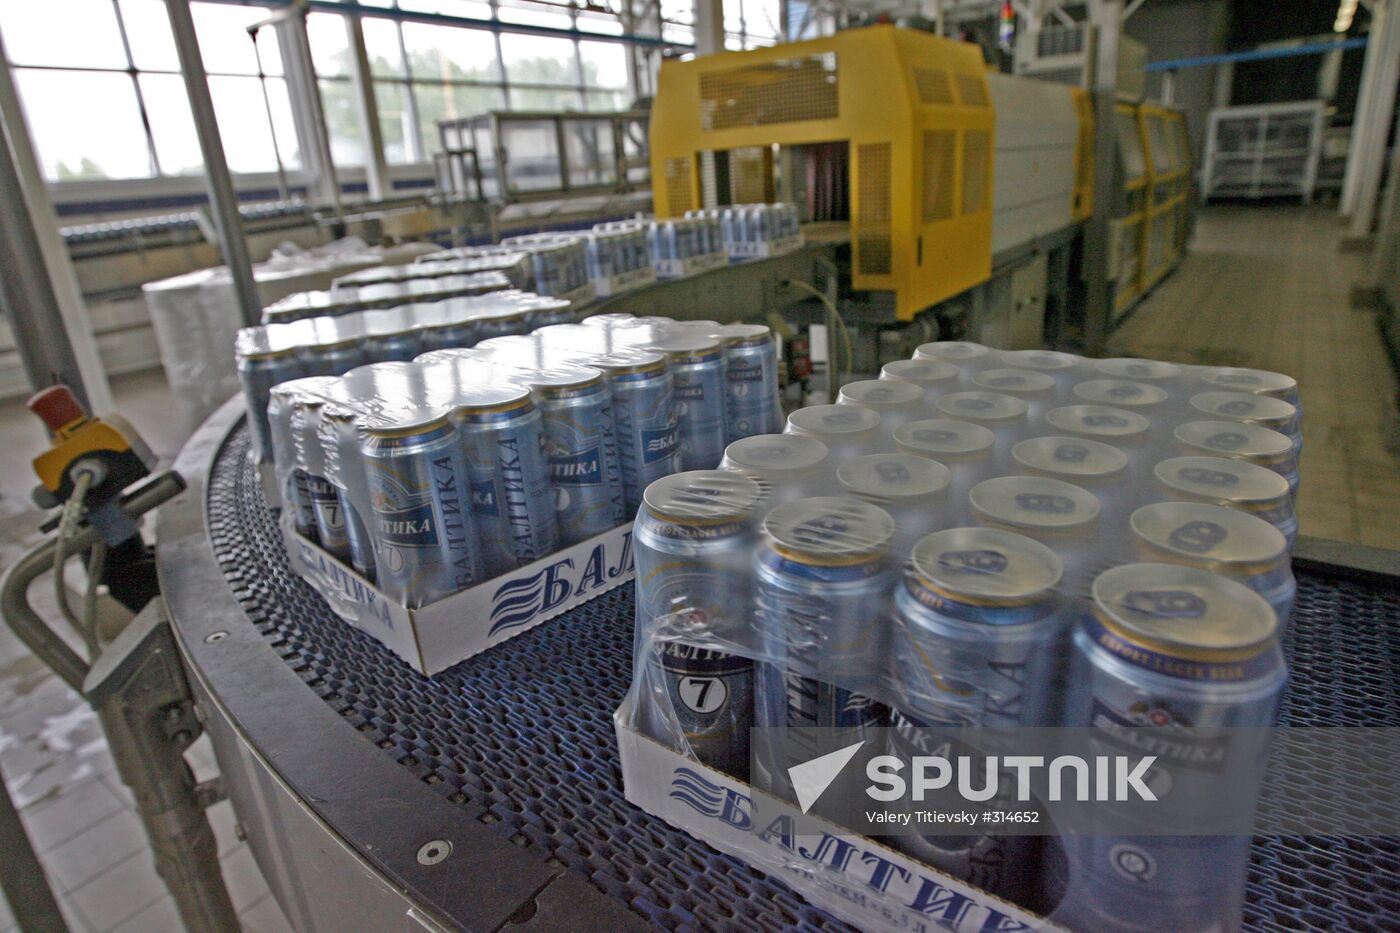 Opening of Baltika brewery in Novosibirsk